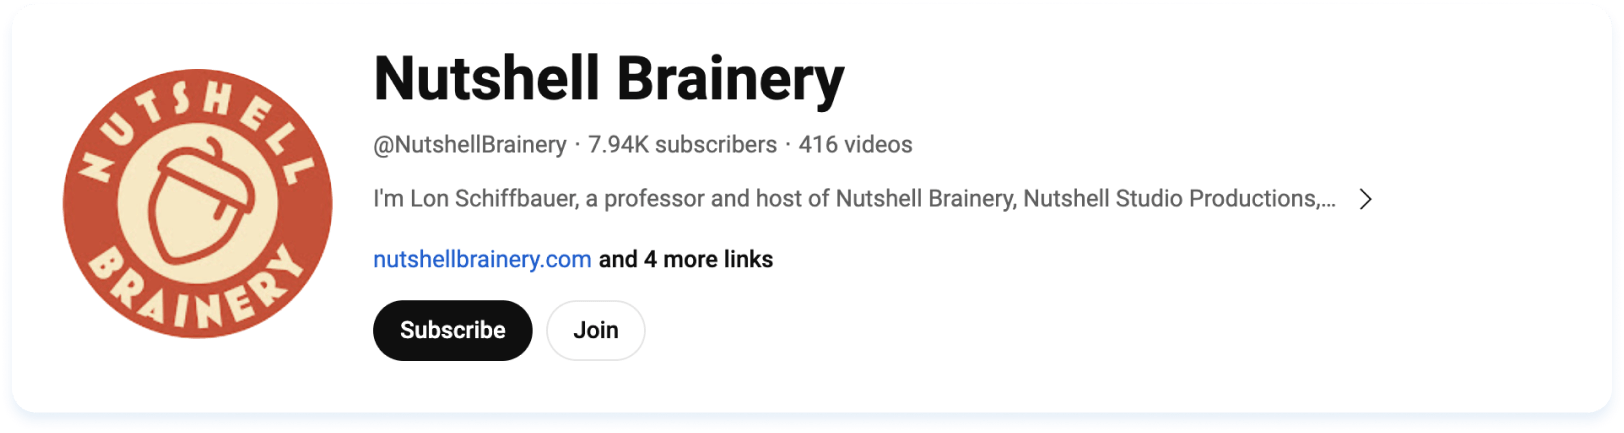 Nutshell Brainery channel